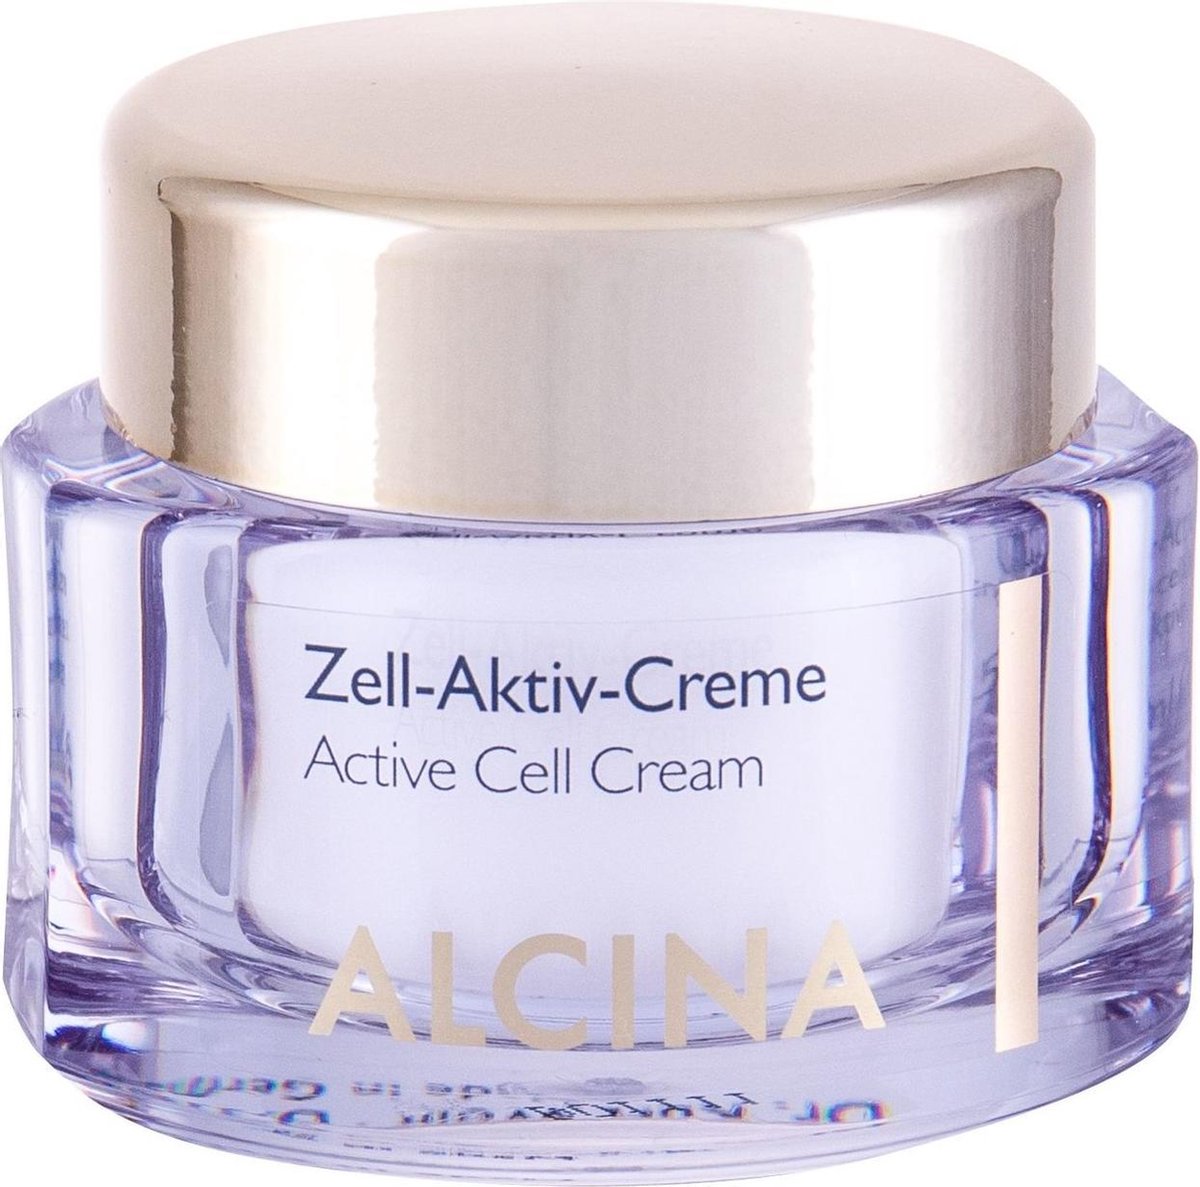 Alcina - Active Cell Cream - 50ml